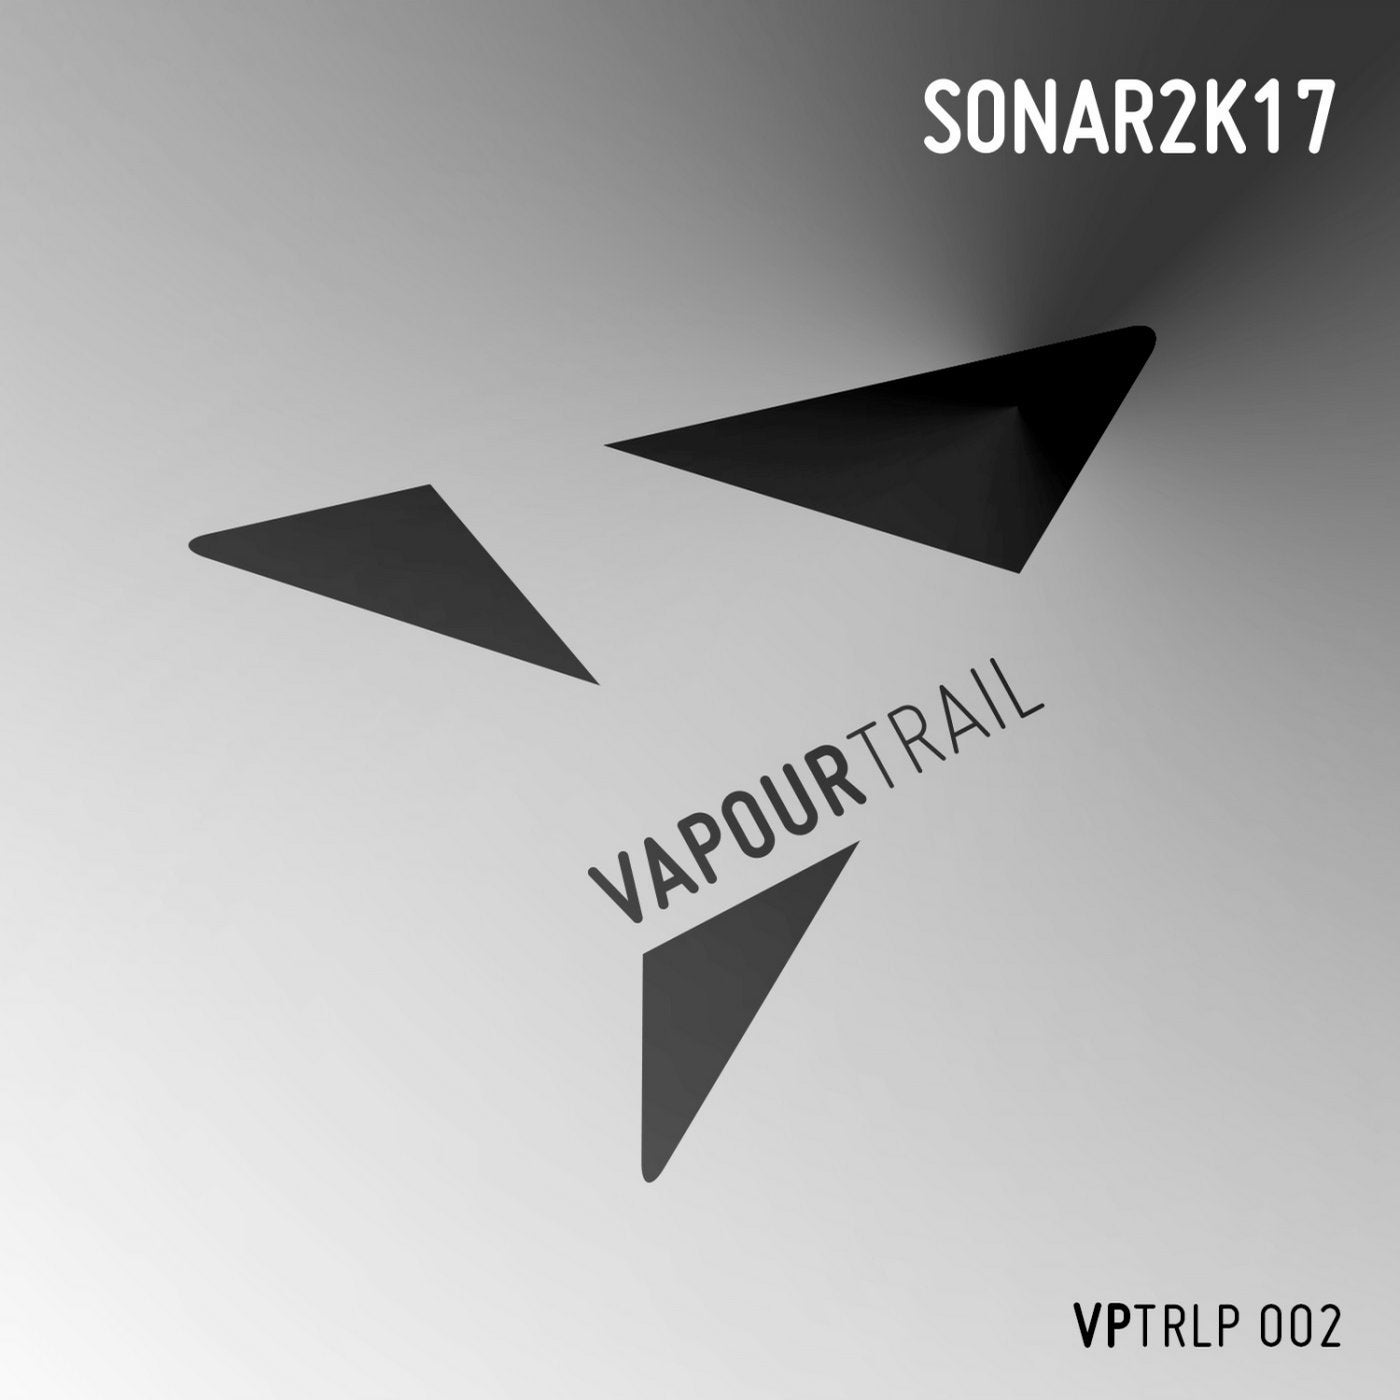 VapourTrail Sonar 2K17